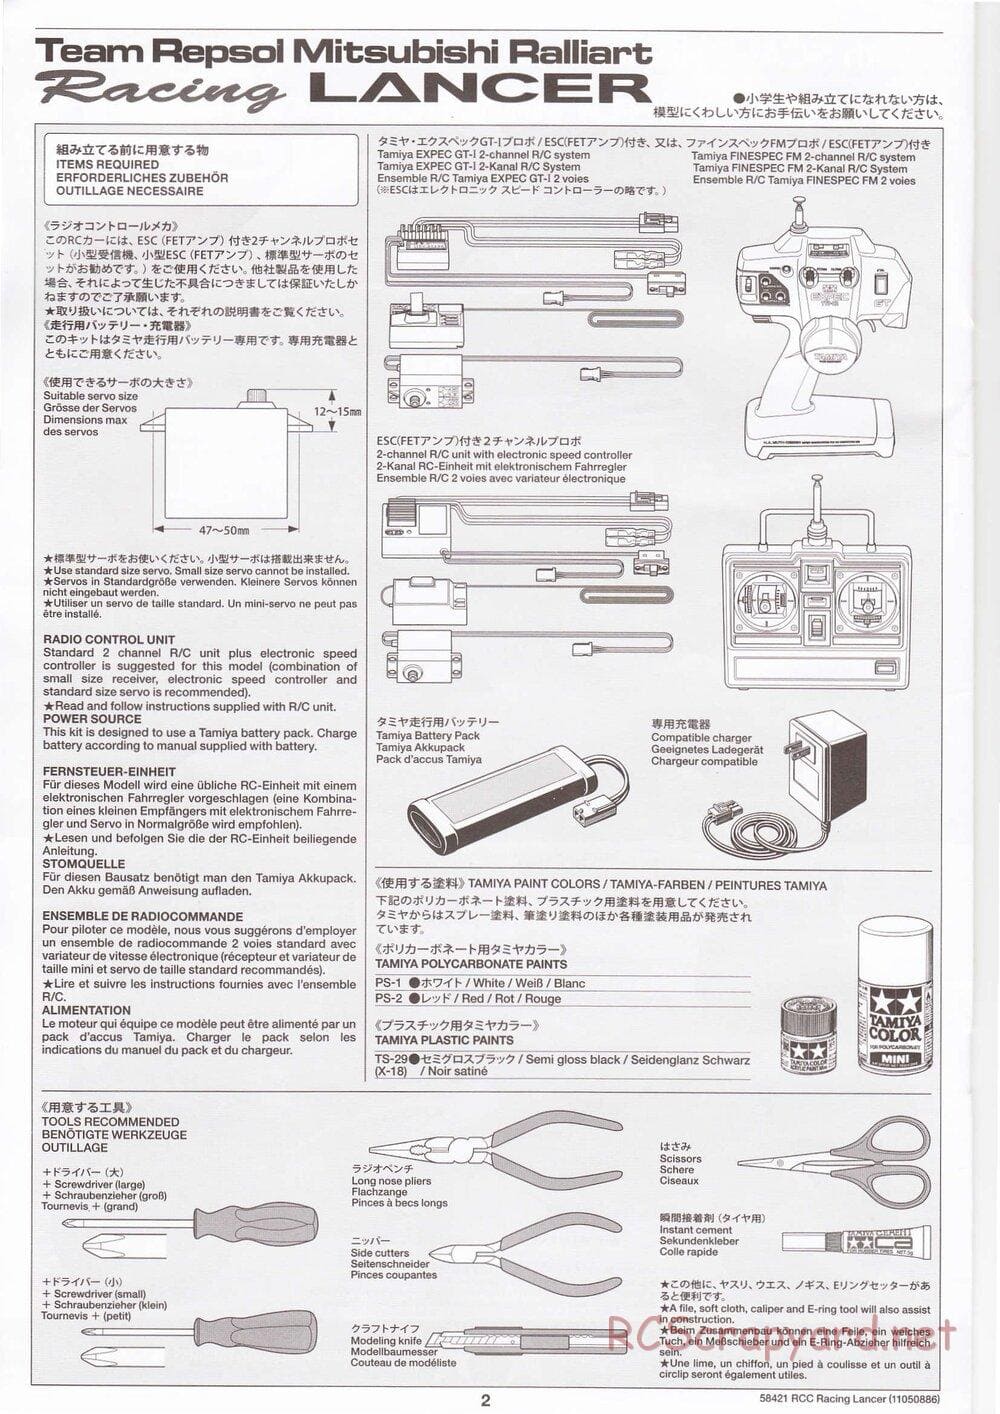 Tamiya - Mitsubishi Racing Lancer - DF-01 Chassis - Manual - Page 2